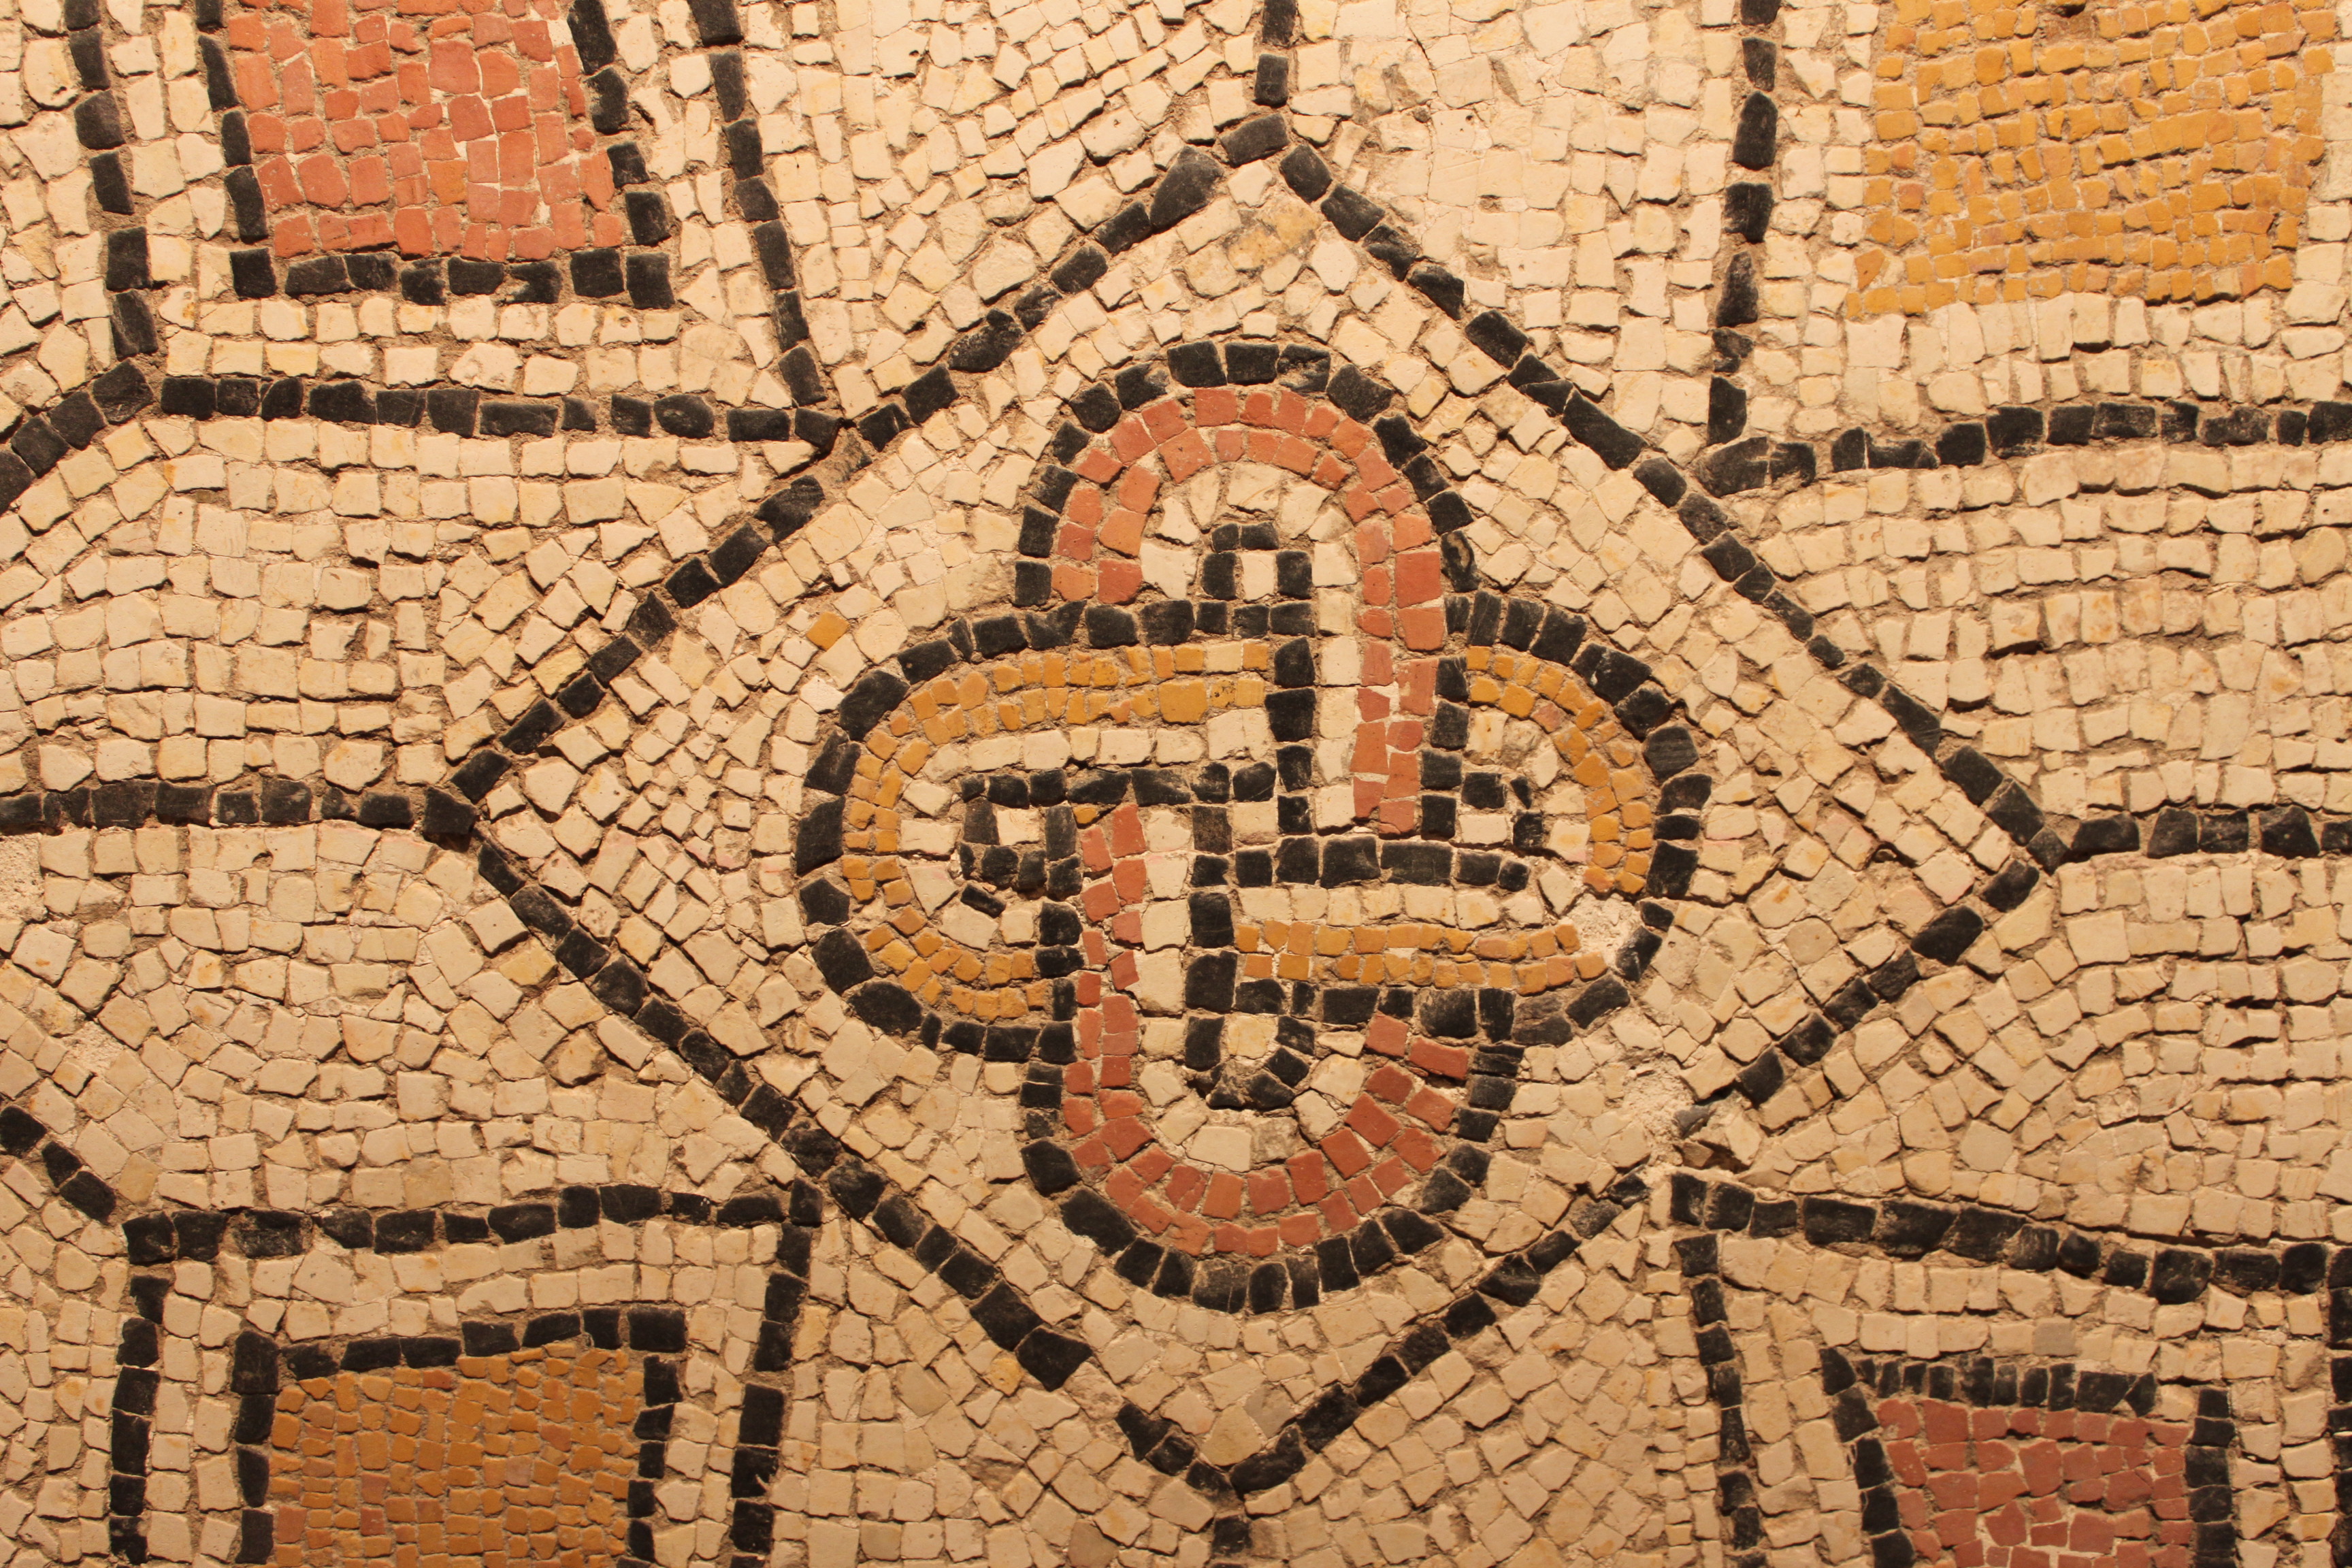 Aguilafuente Aula arqueologica mosaico